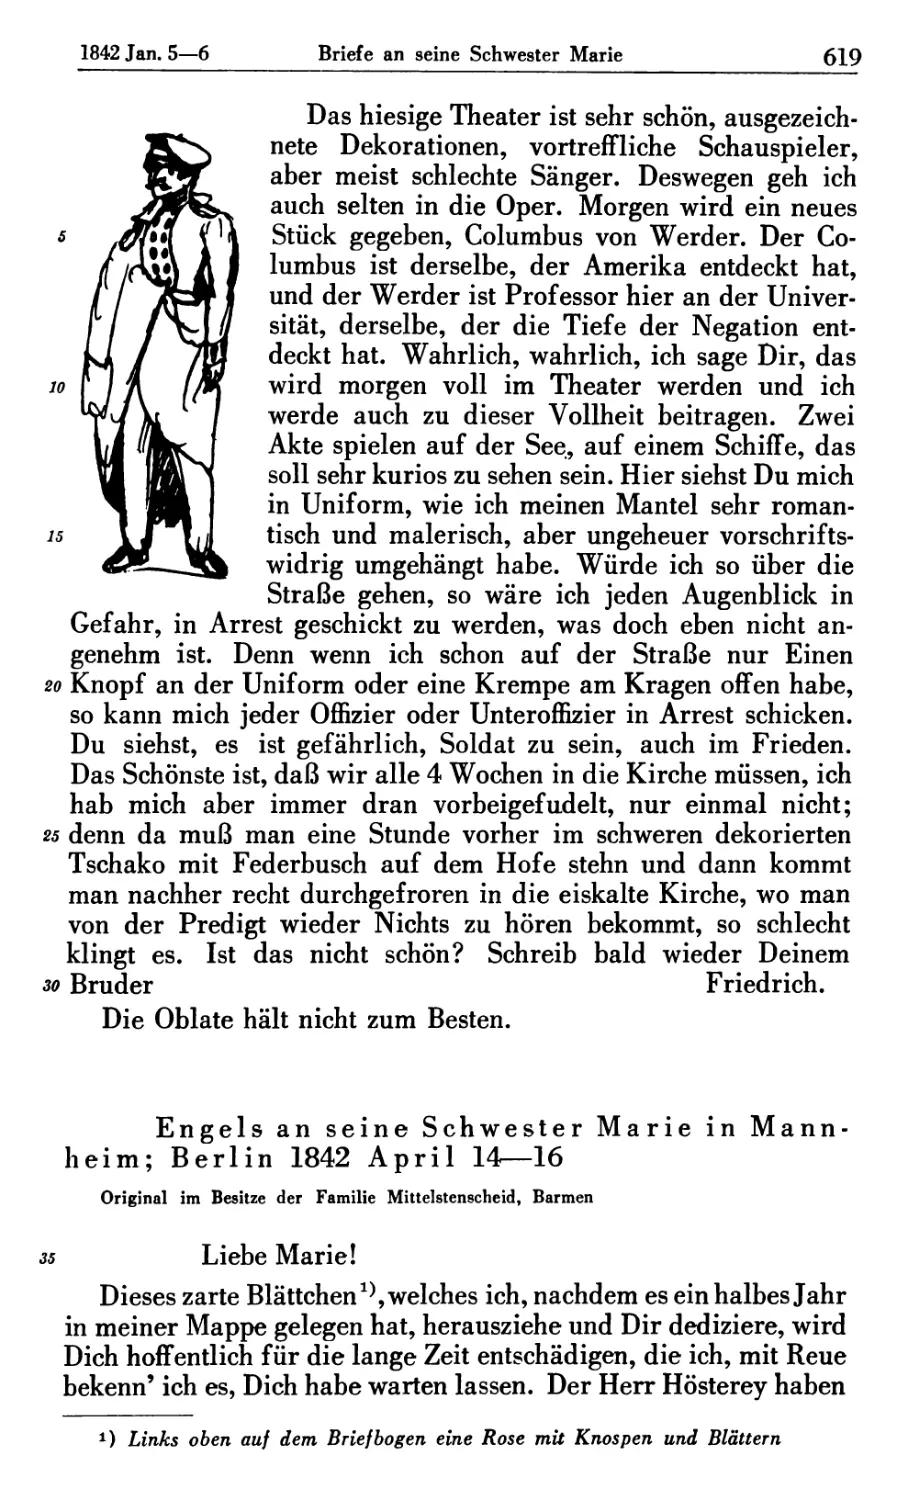 Engels an seine Schwester Marie in Mannheim; Berlin 1842 April 14-16